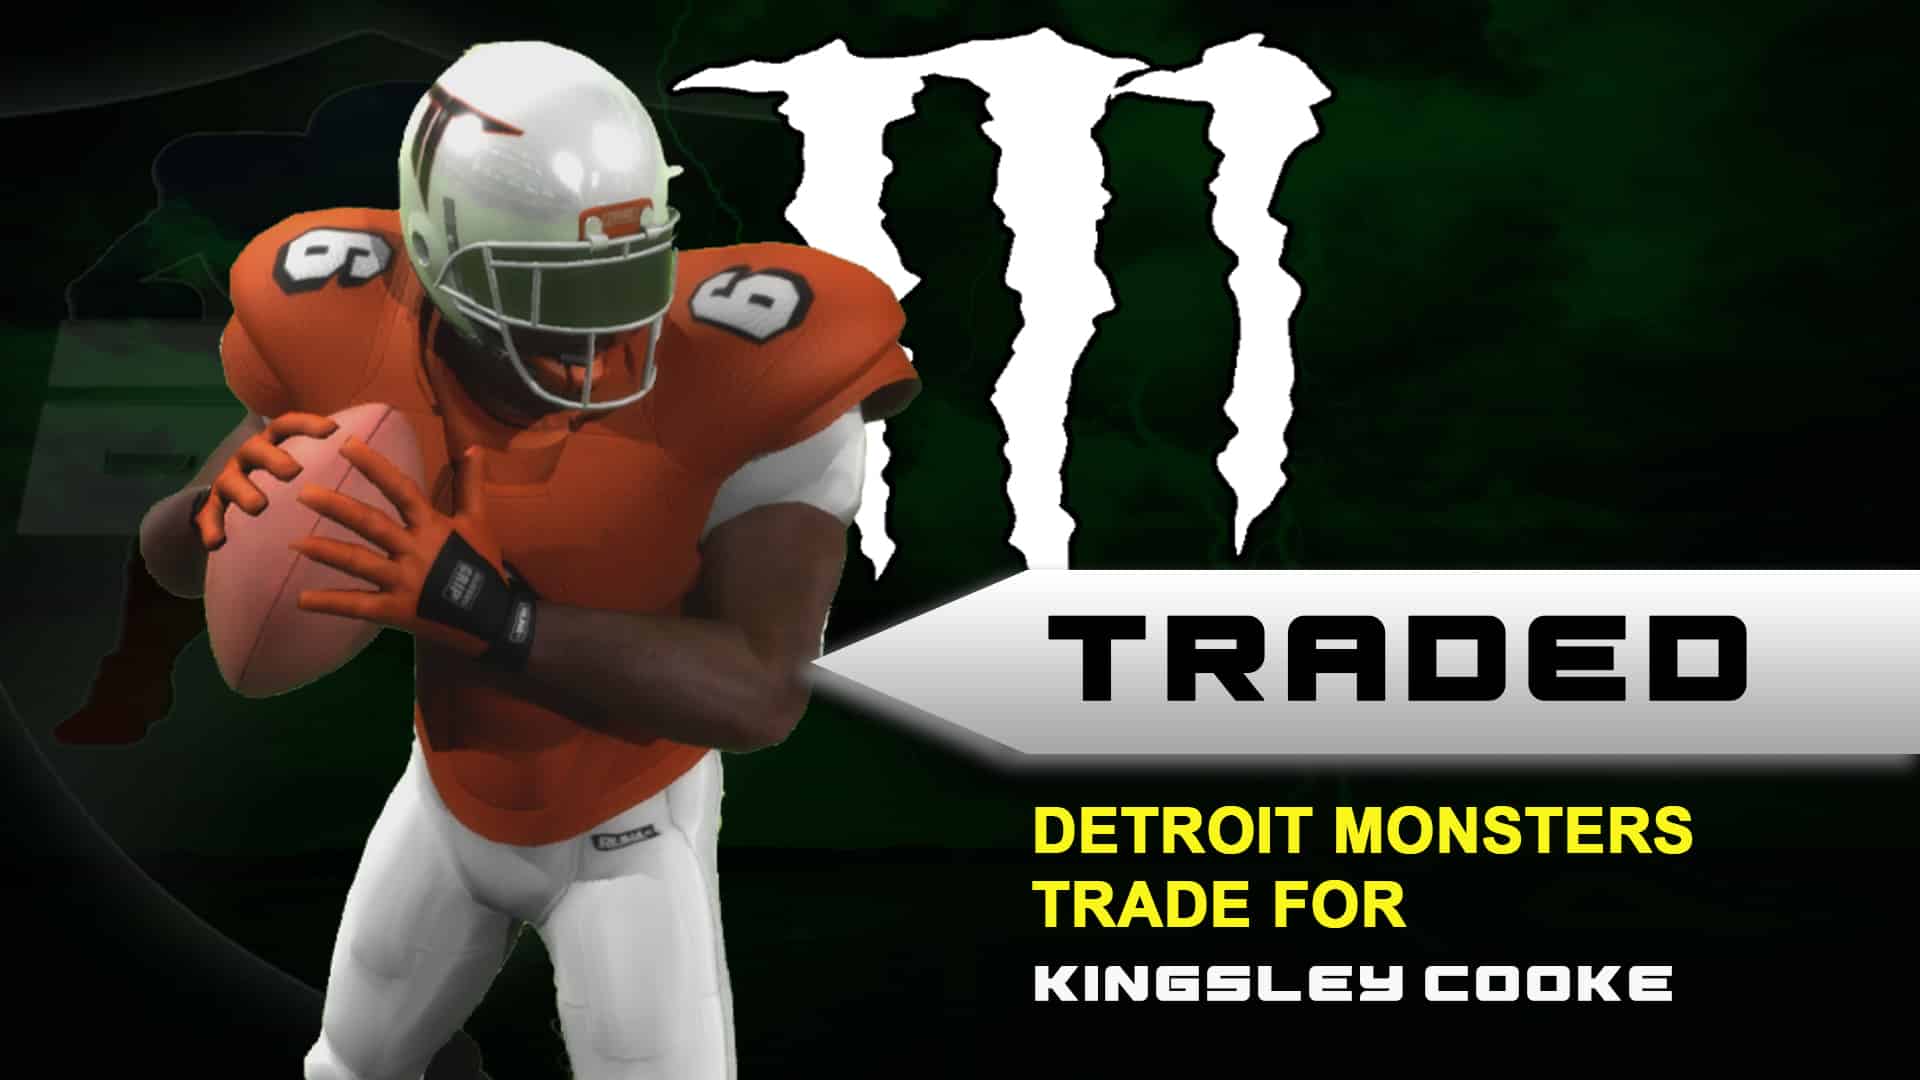 Detroit Monsters trade for Kingsley Cooke